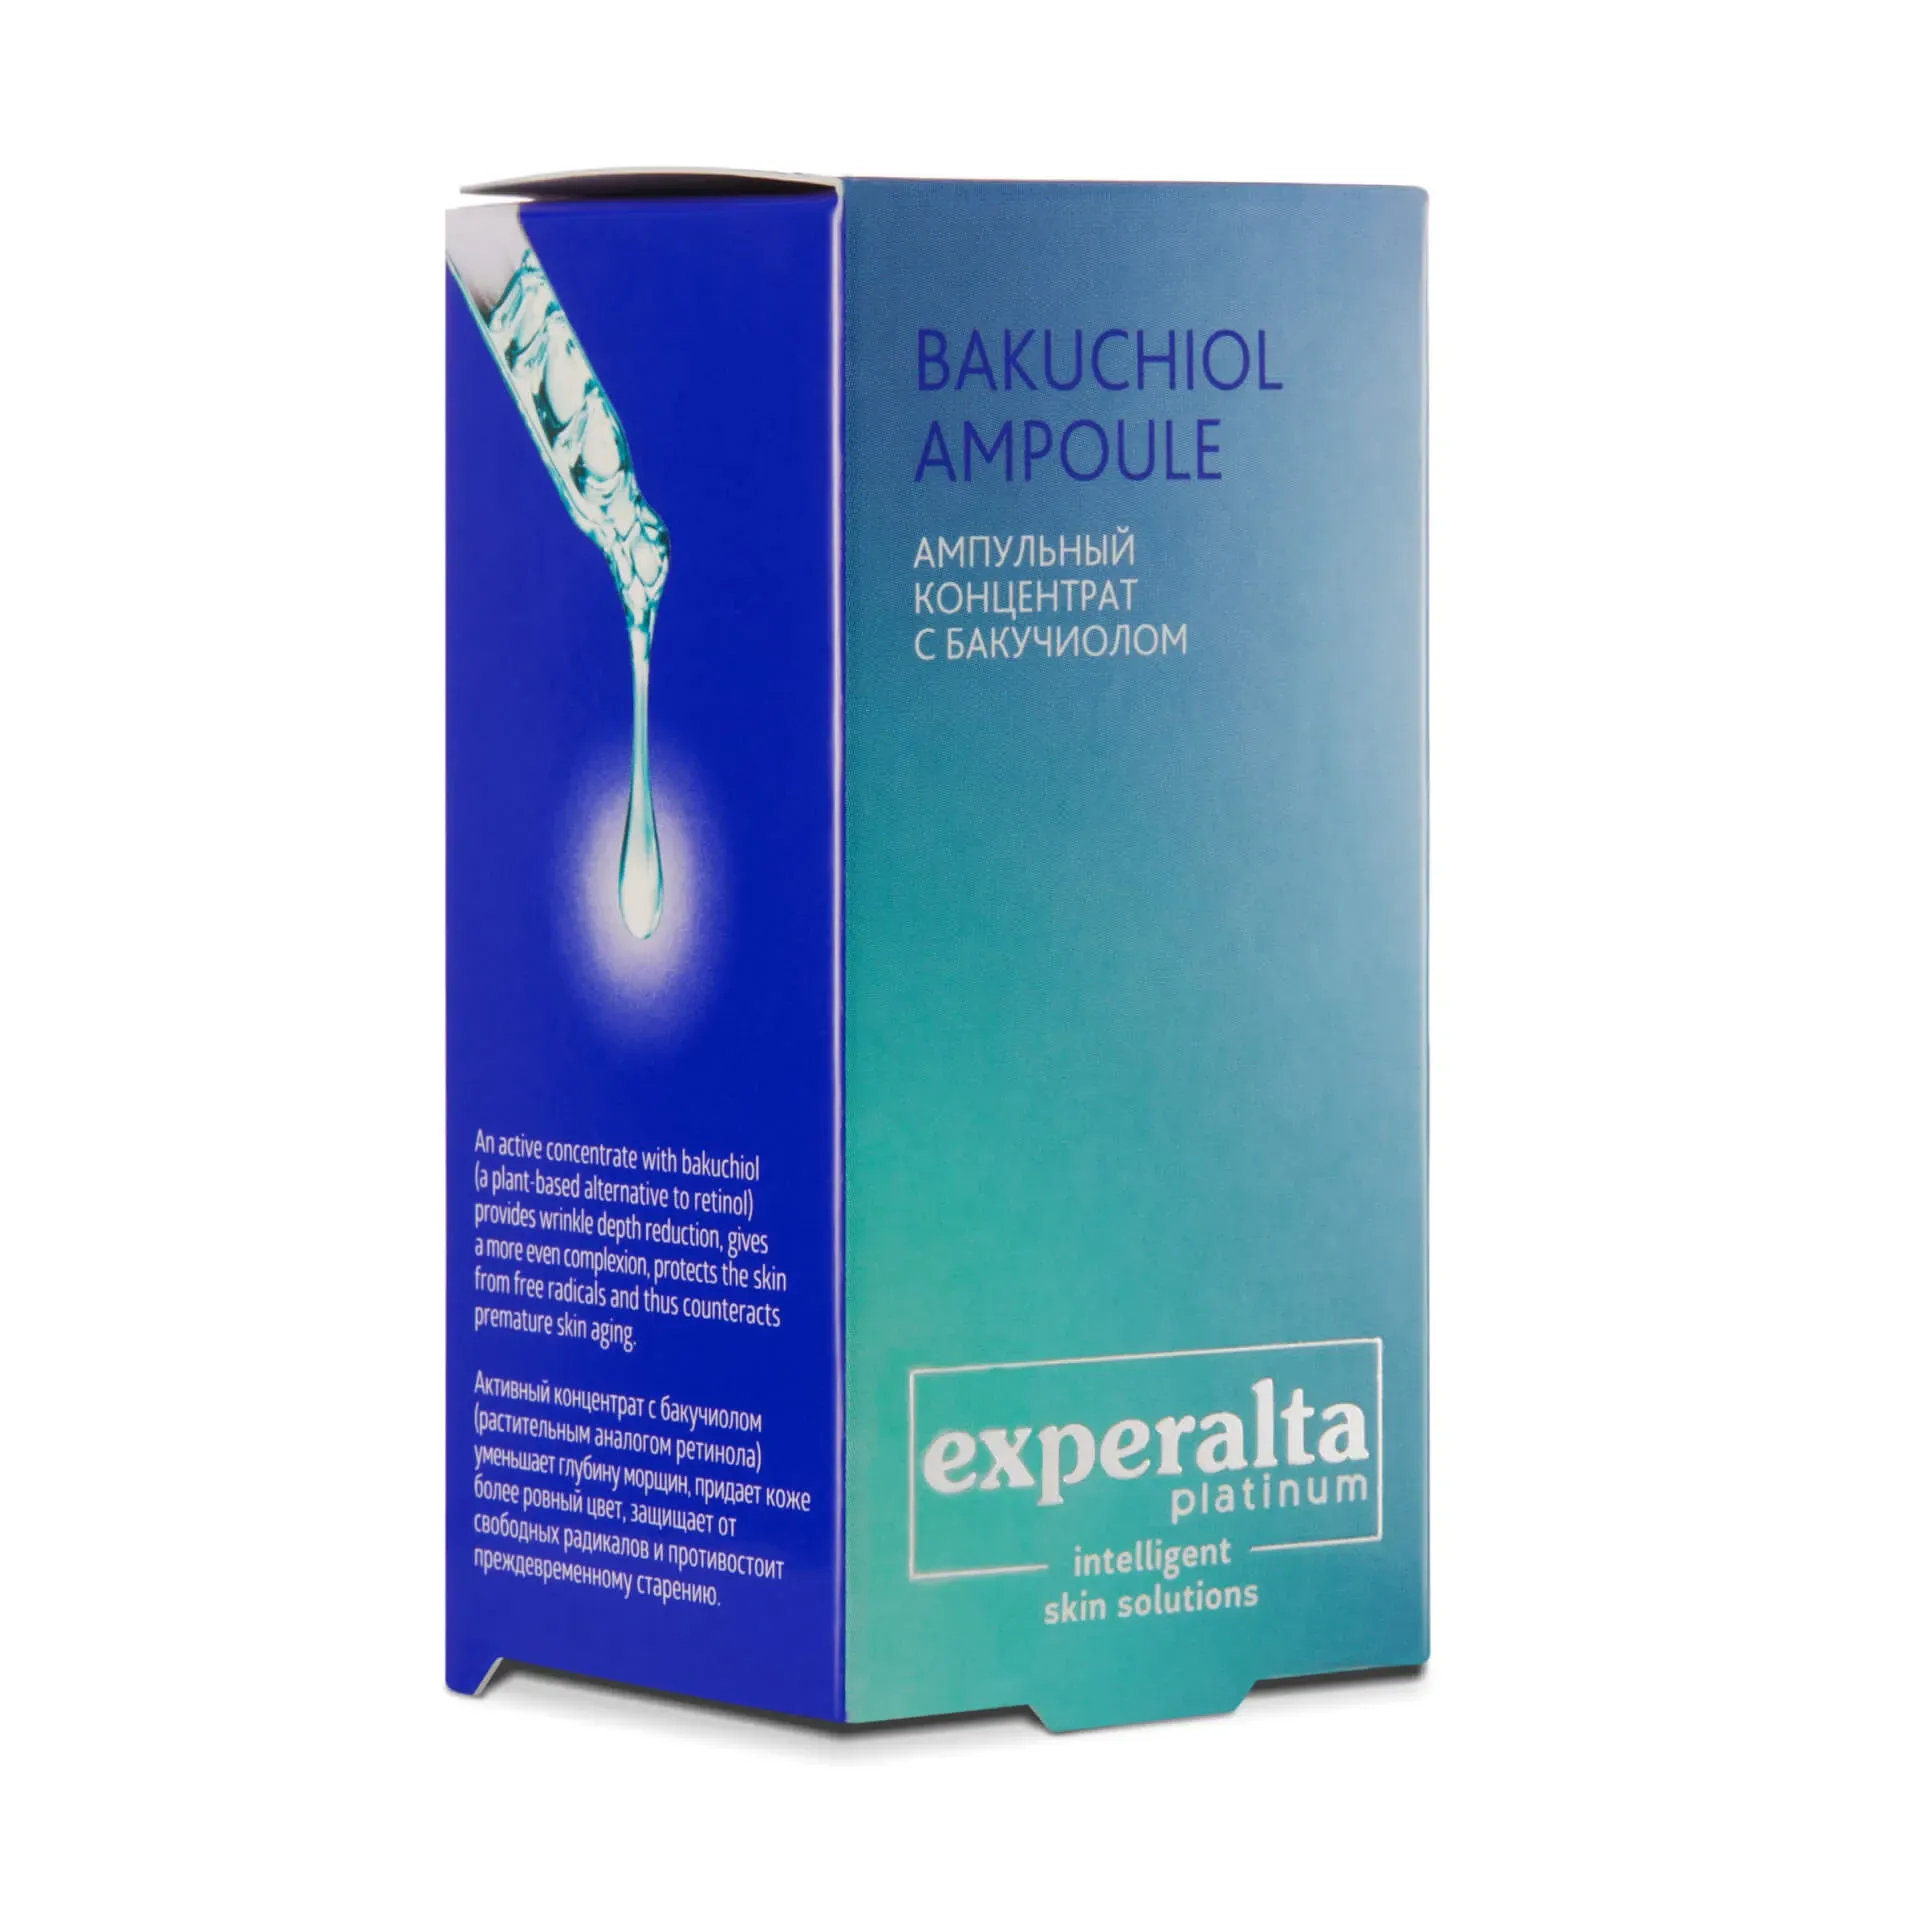 Experalta Platinum - Bakuchiol Ampoule